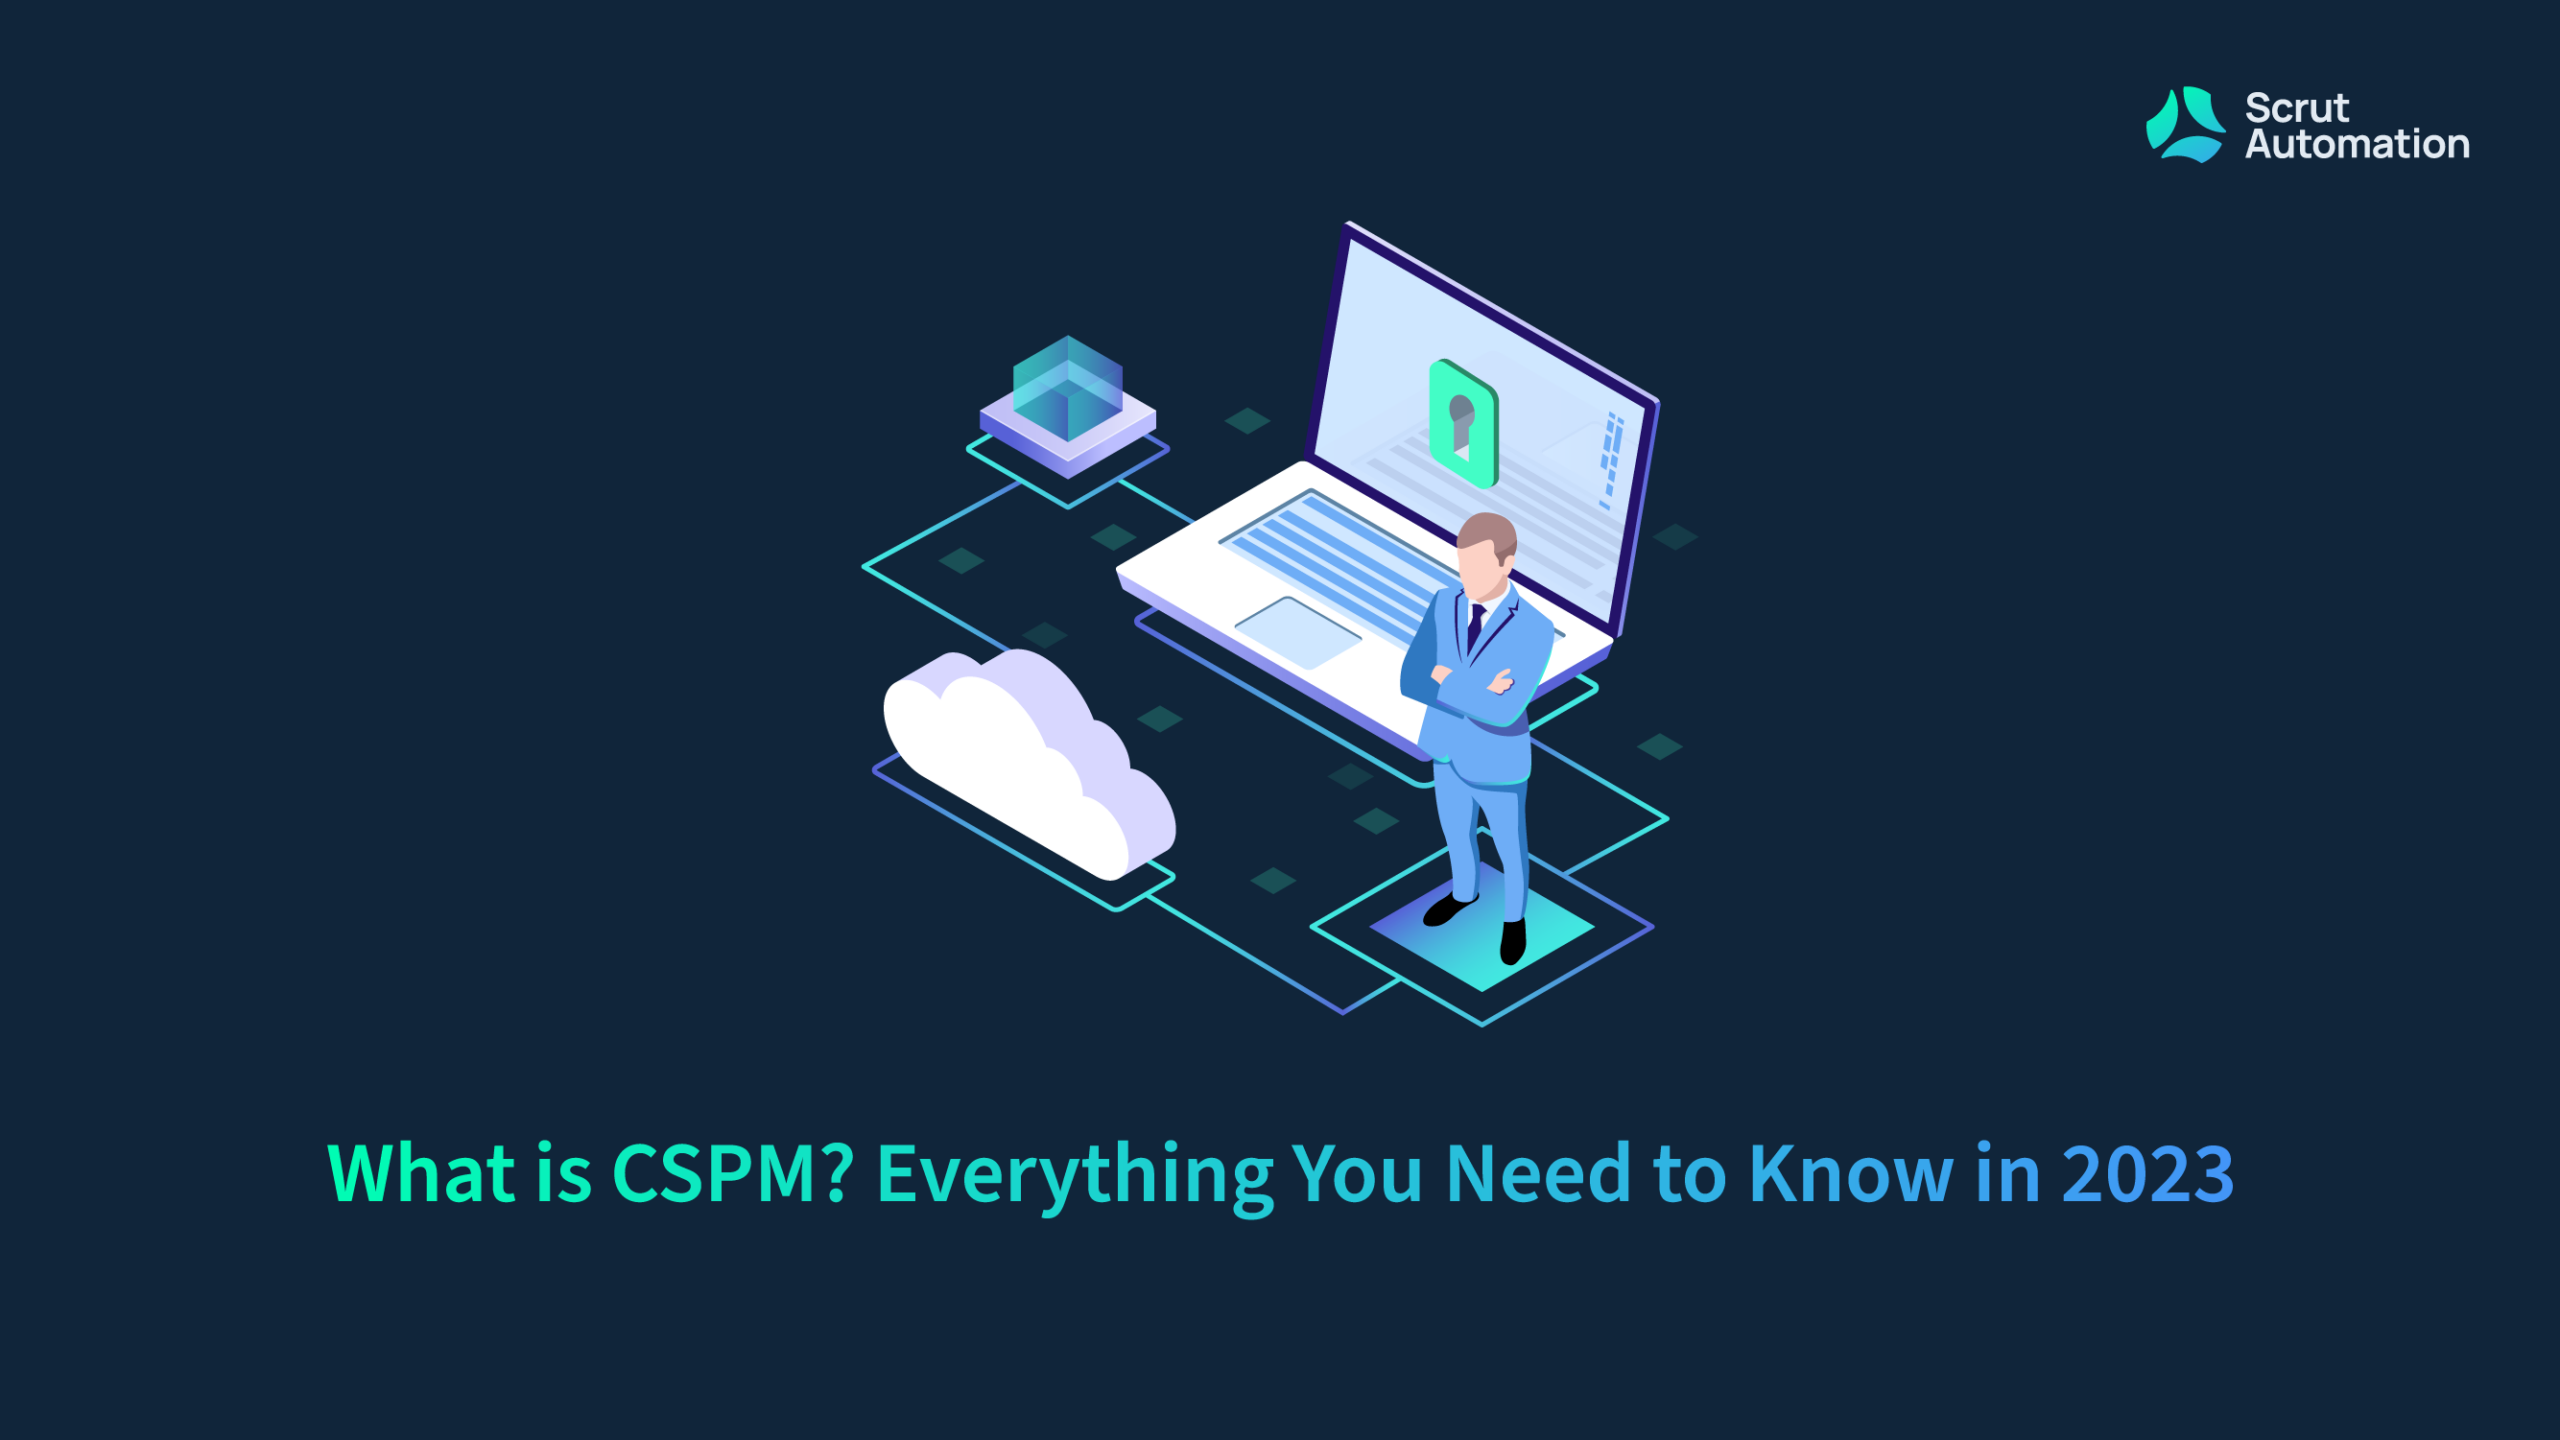 A comprehensive guide on CSPM